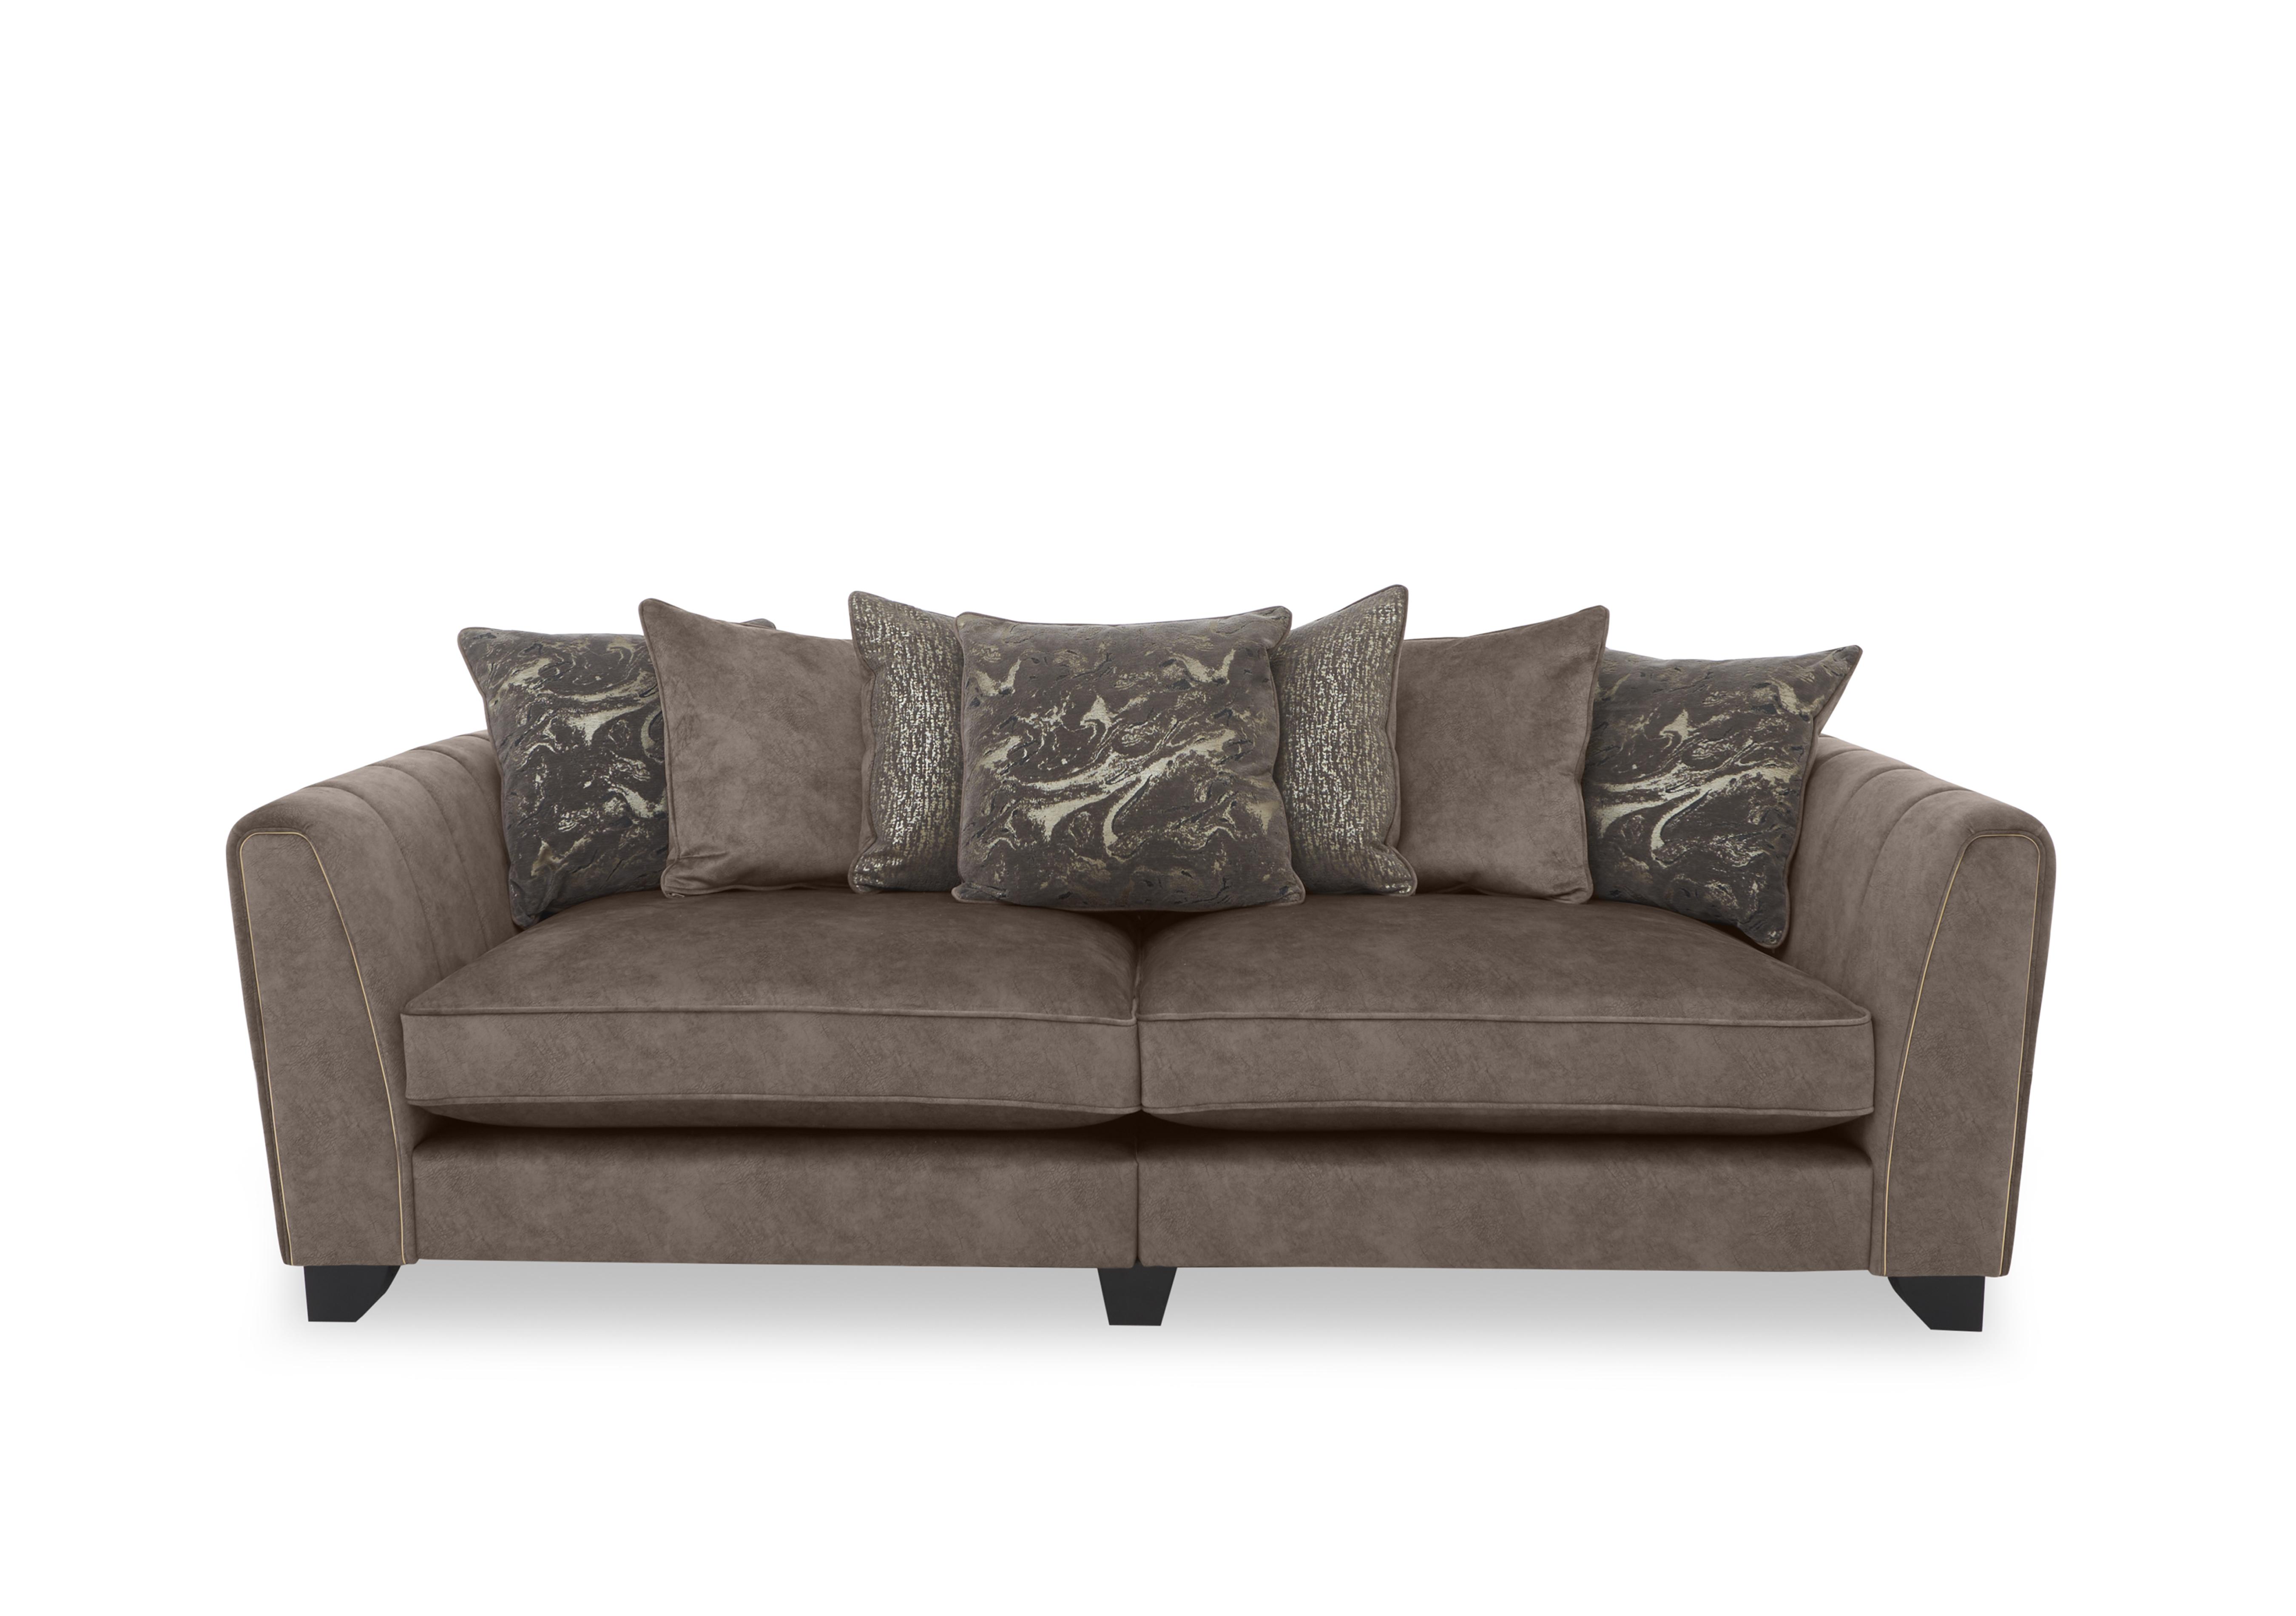 Ariana 4 Seater Fabric Pillow Back Split Frame Sofa in Chocolate Portoro Brass Trim on Furniture Village